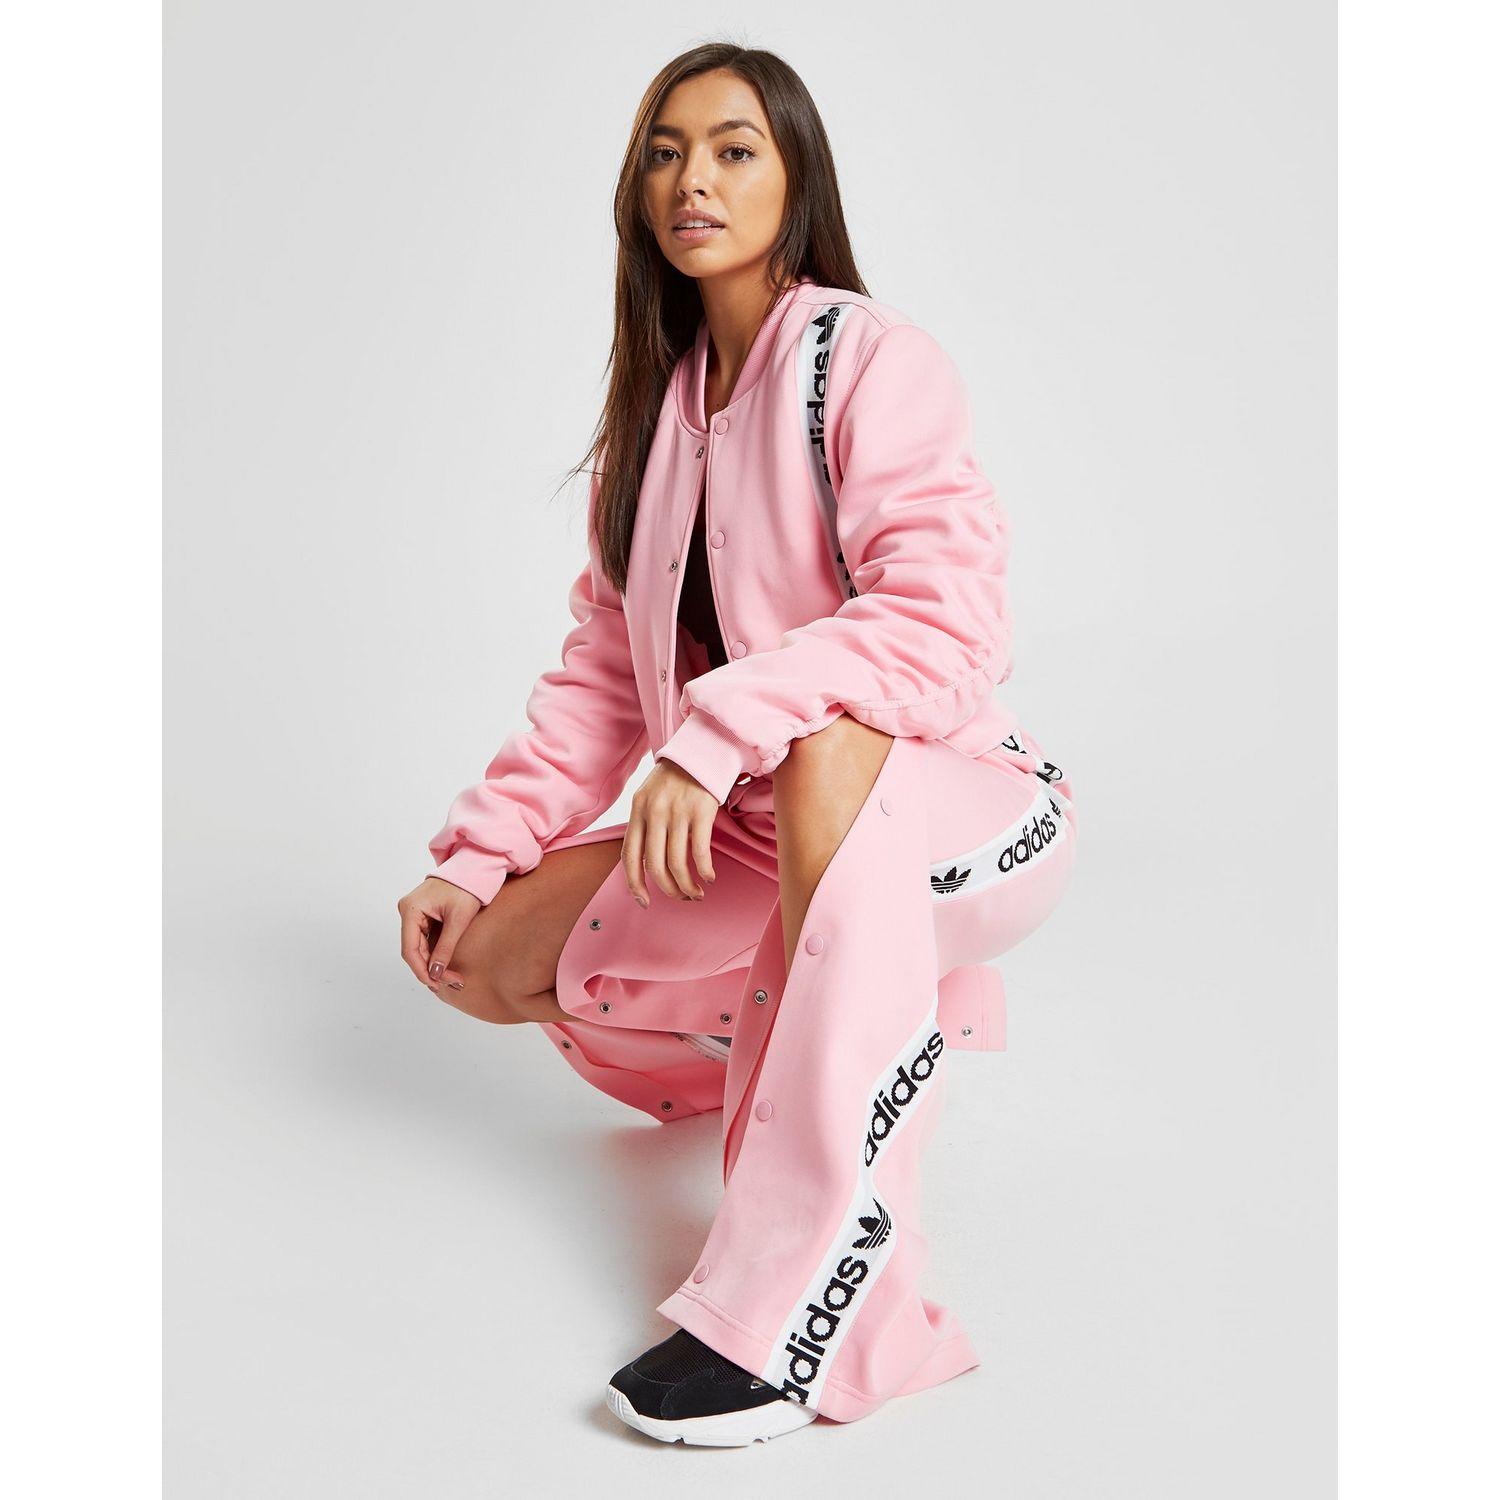 adidas pink cropped bomber jacket